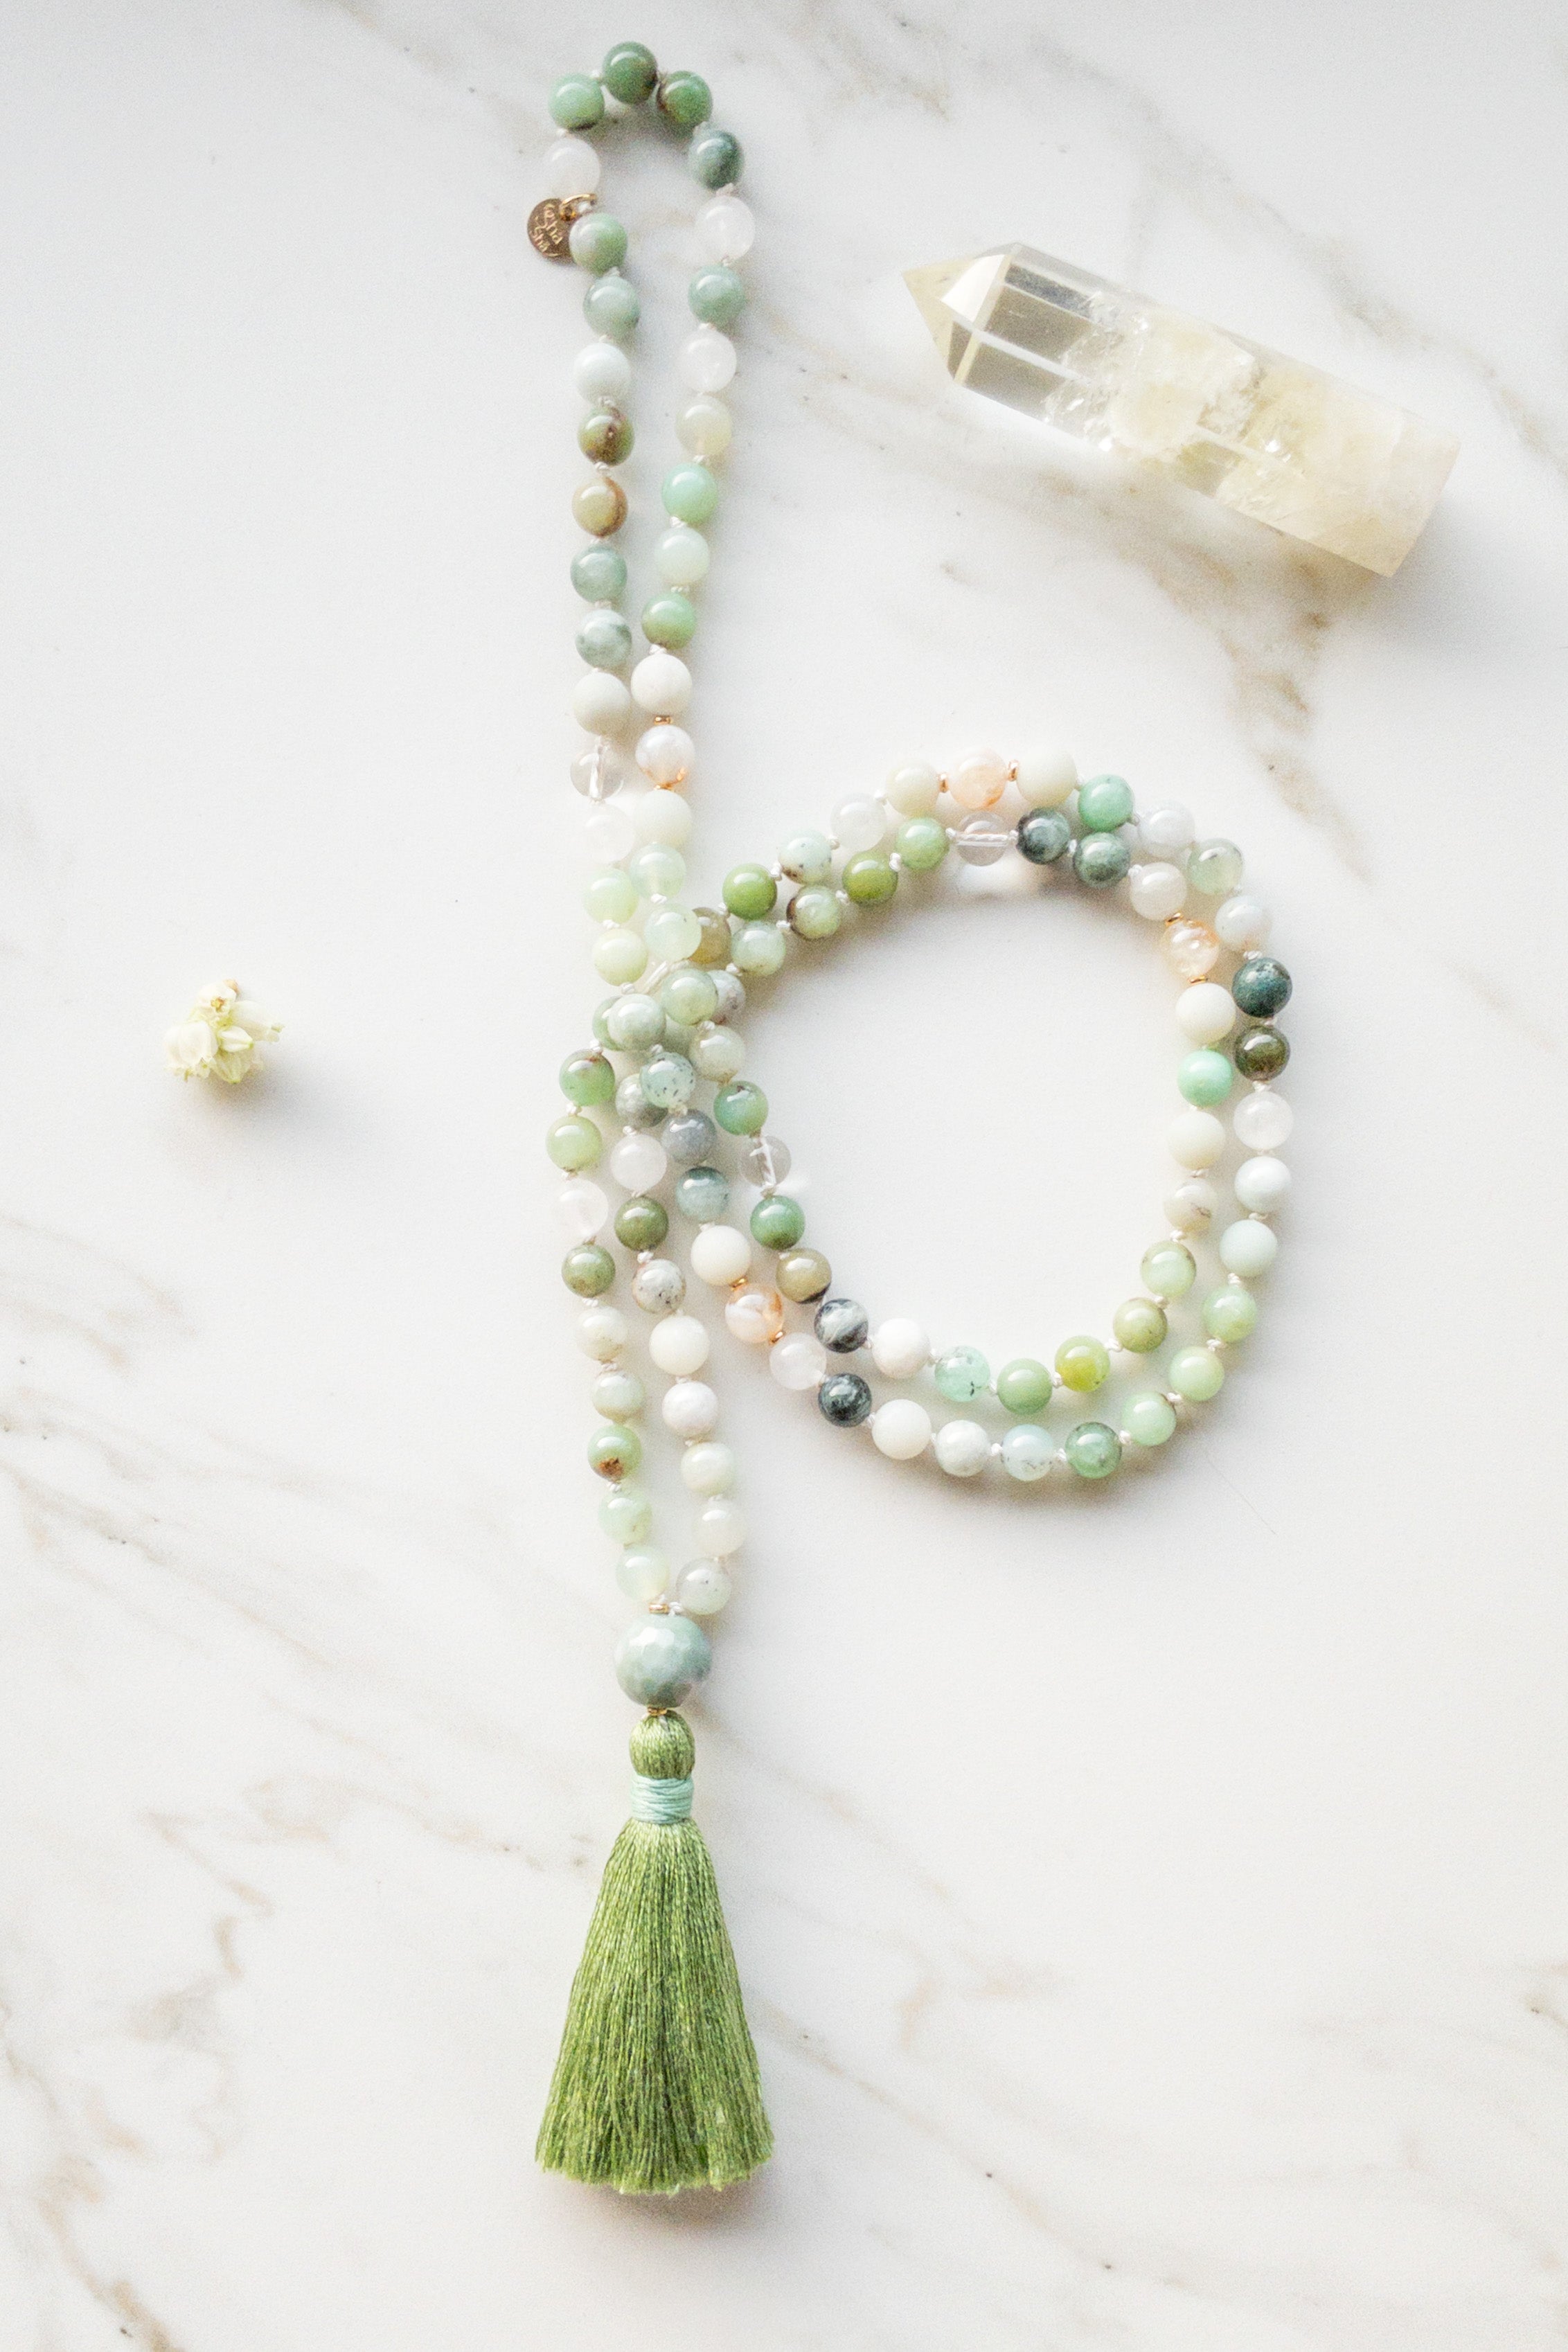 Spiritual Oasis Mala 108 beads - Chrysoprase, Jade, Citrine - Oceaneye collection - shashā jewellery Switzerland 